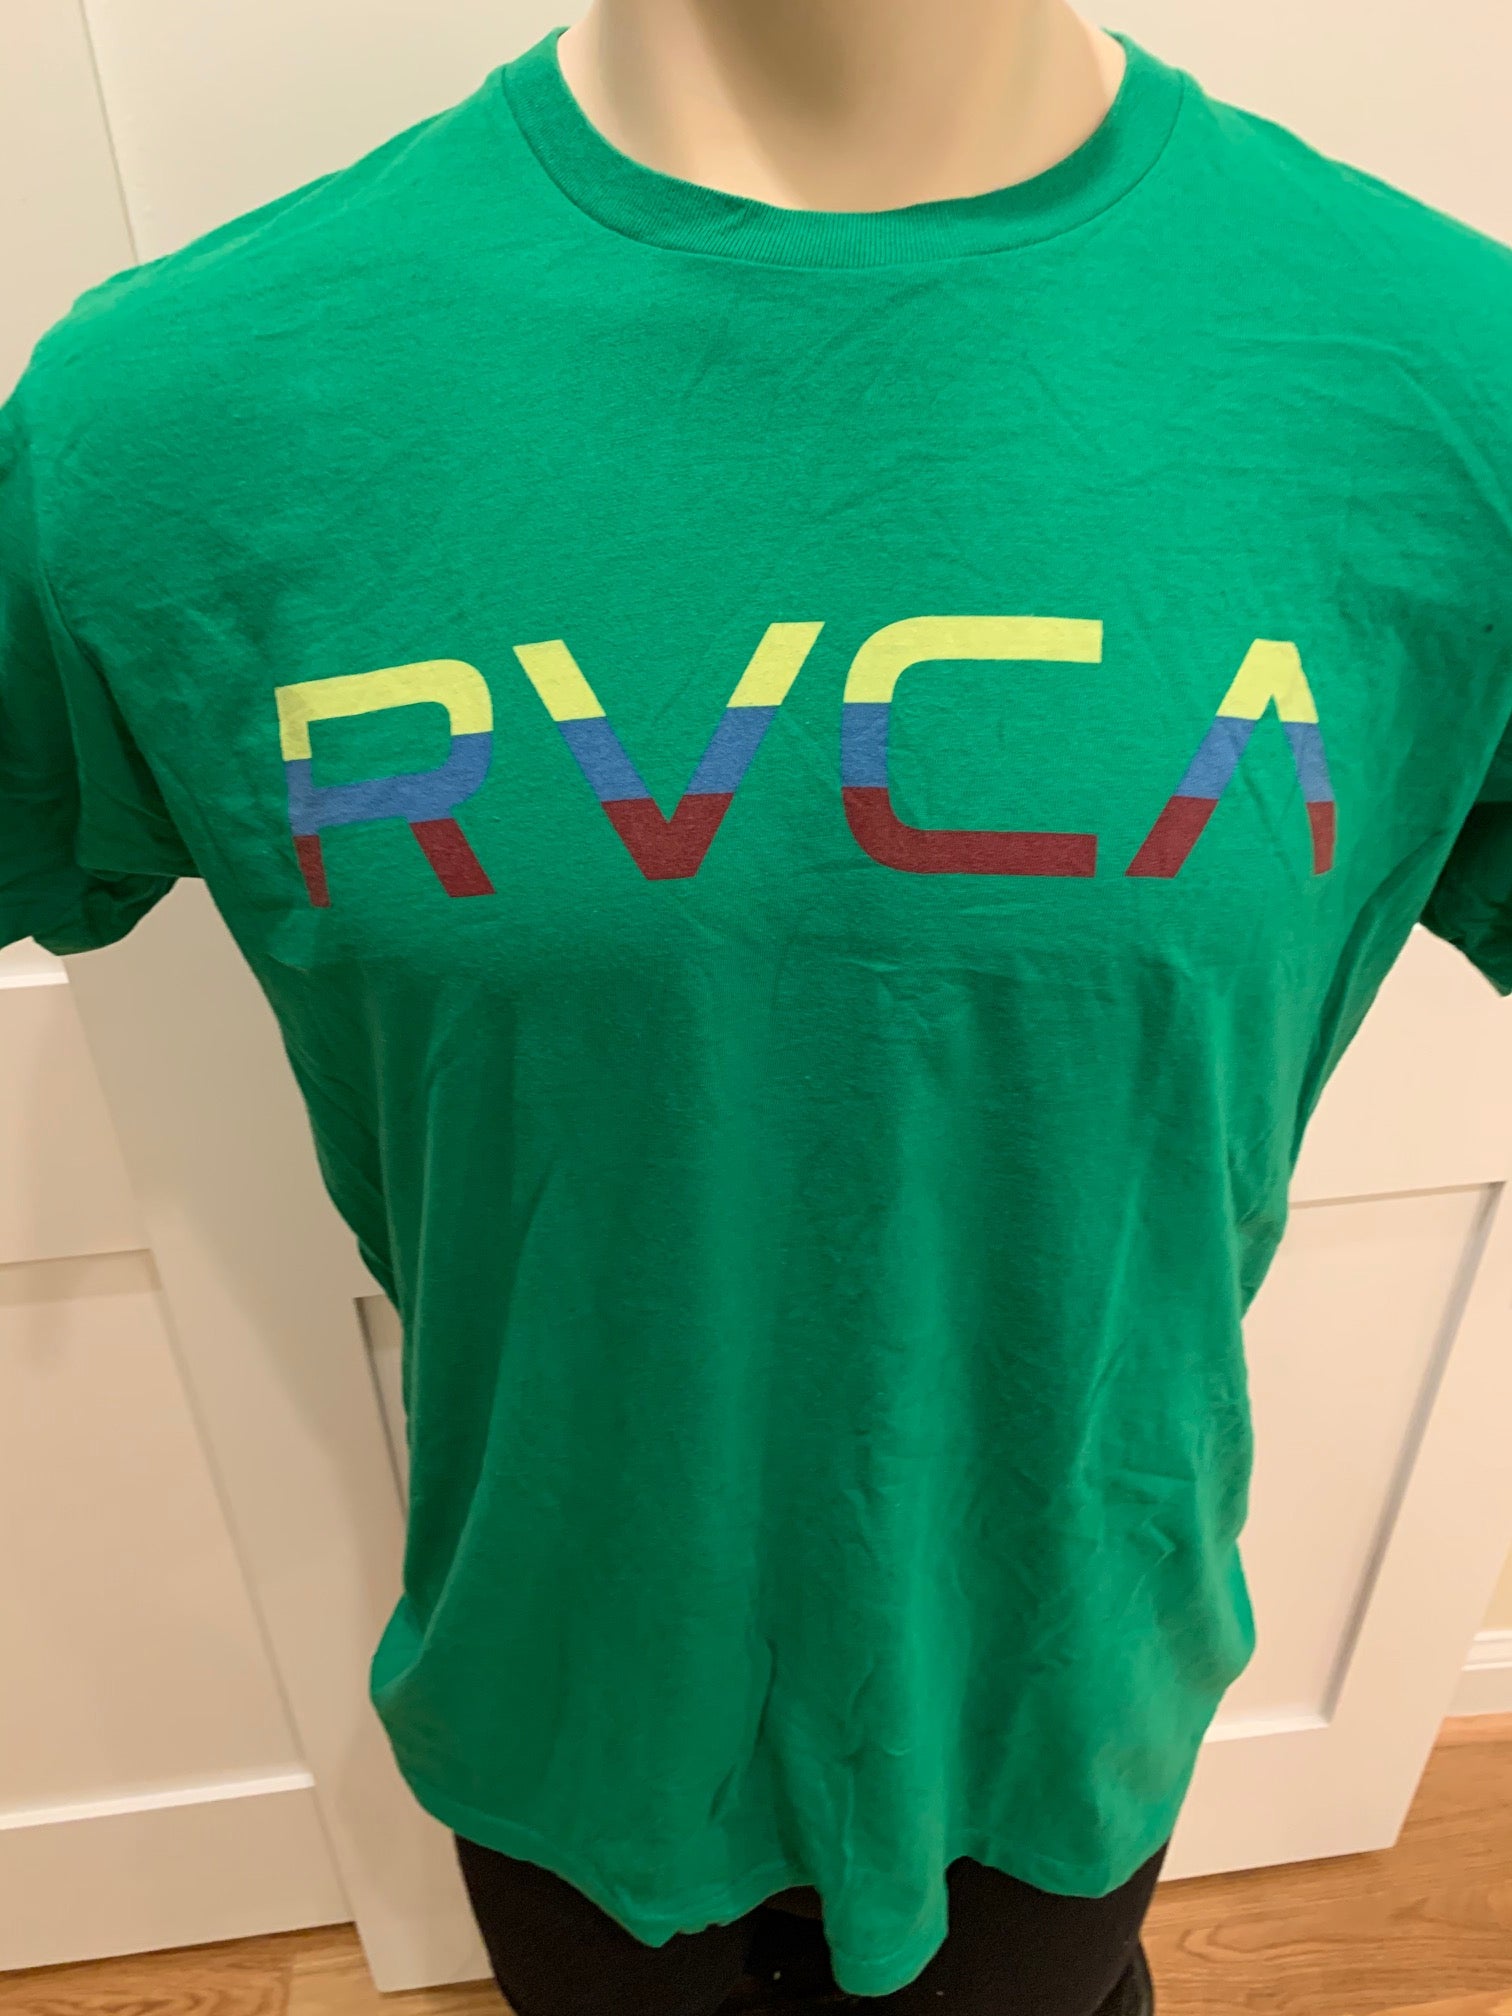 RVCA Logo Tee Shirt (Green) - Large